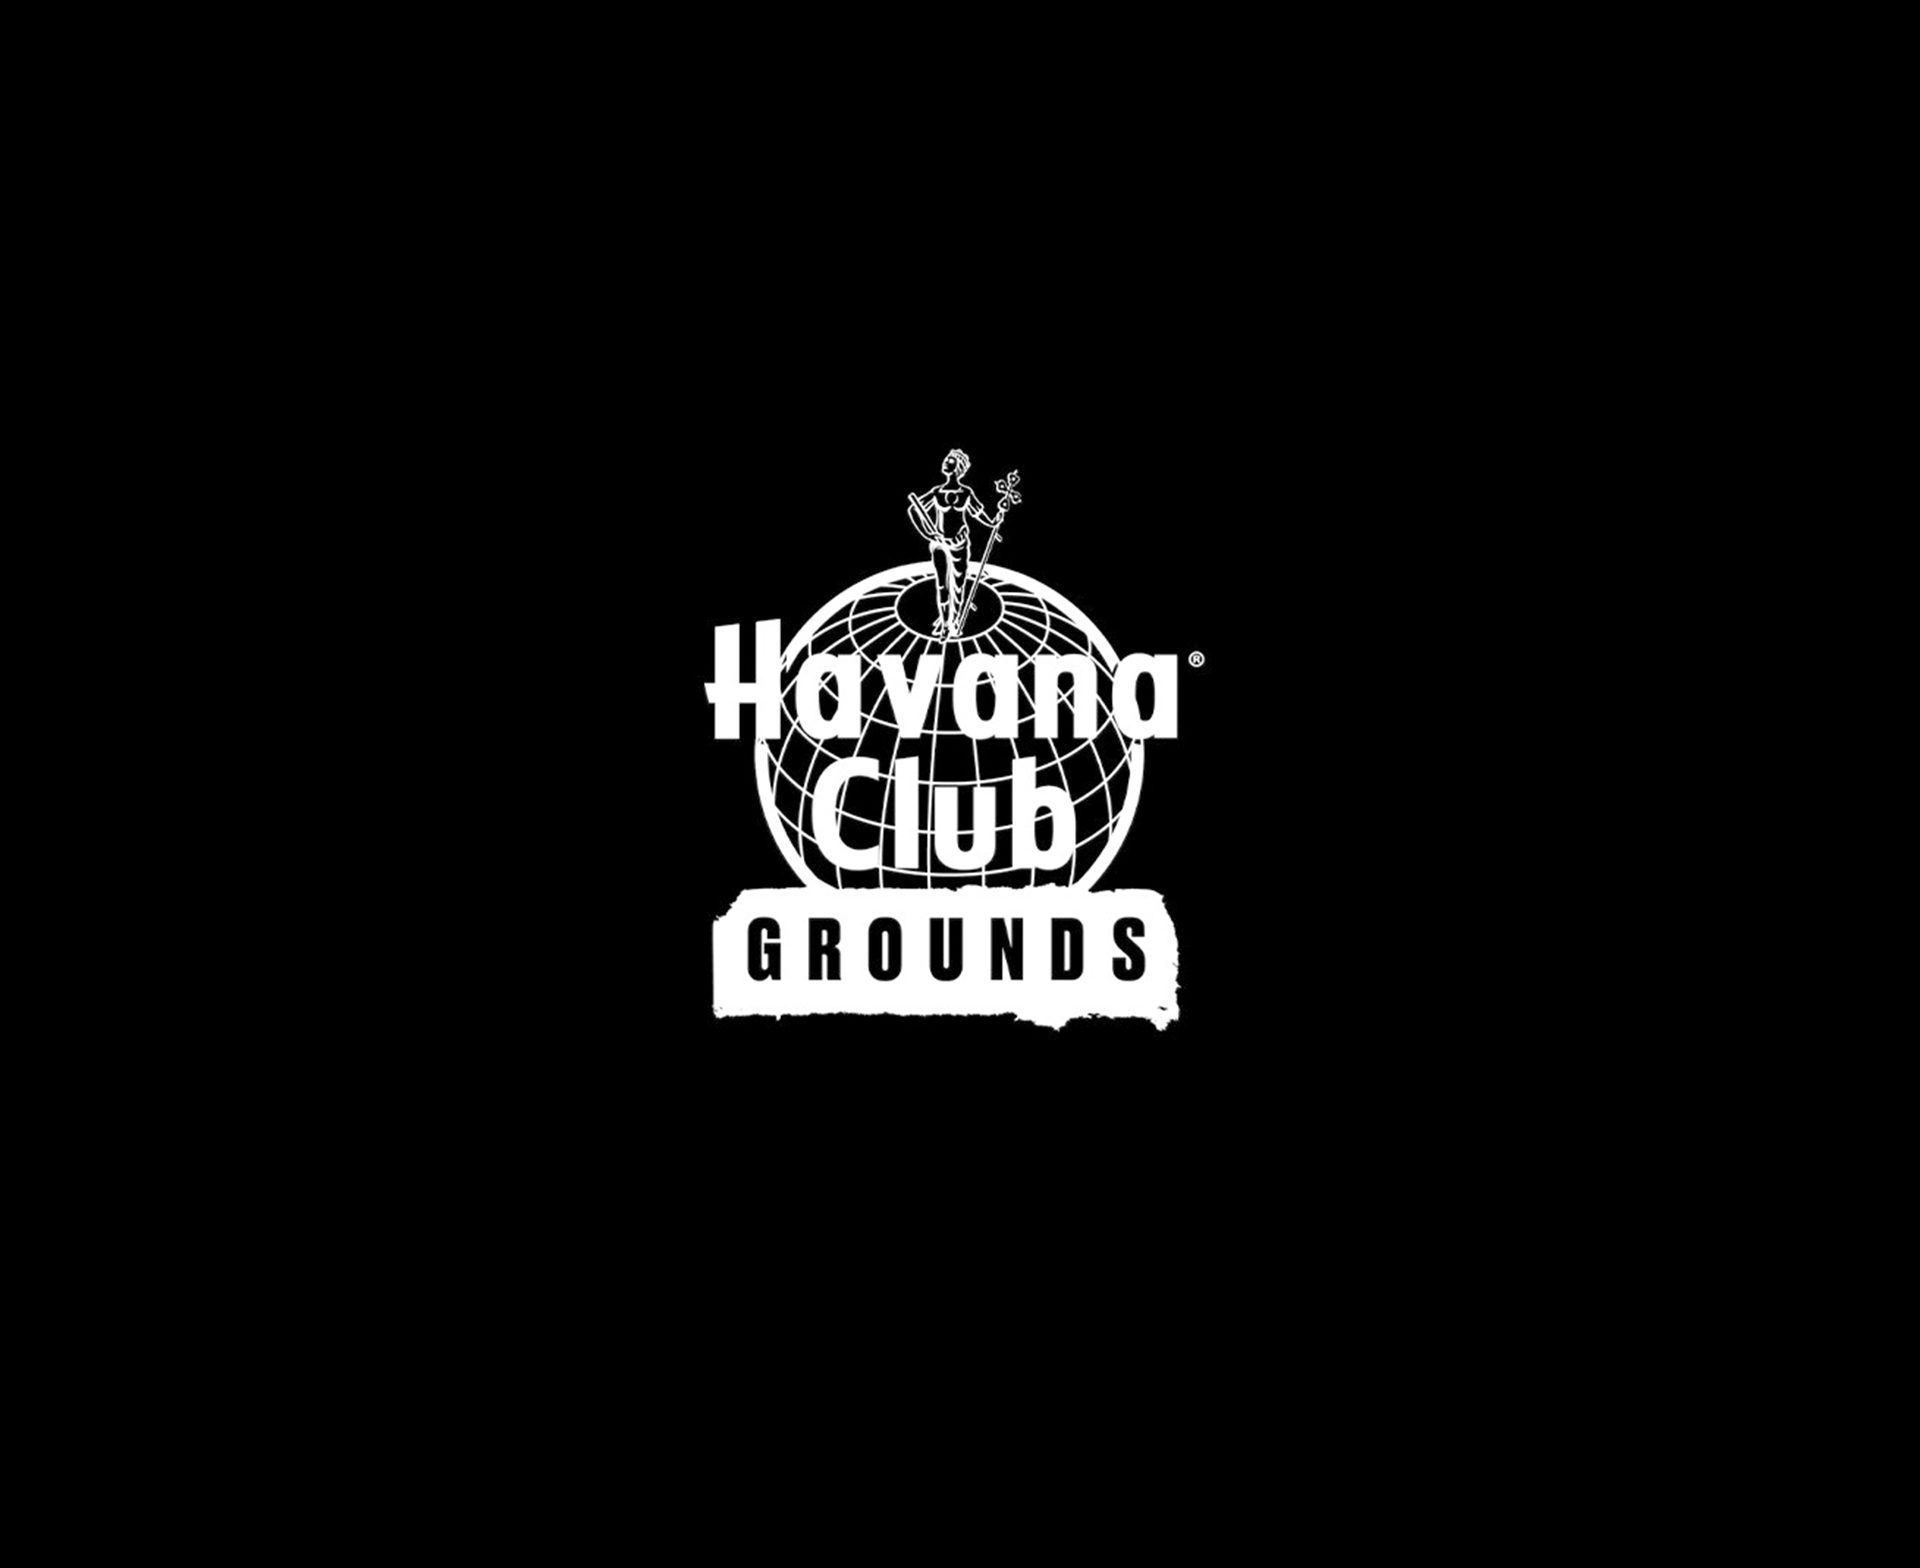 Havana Club Grounds